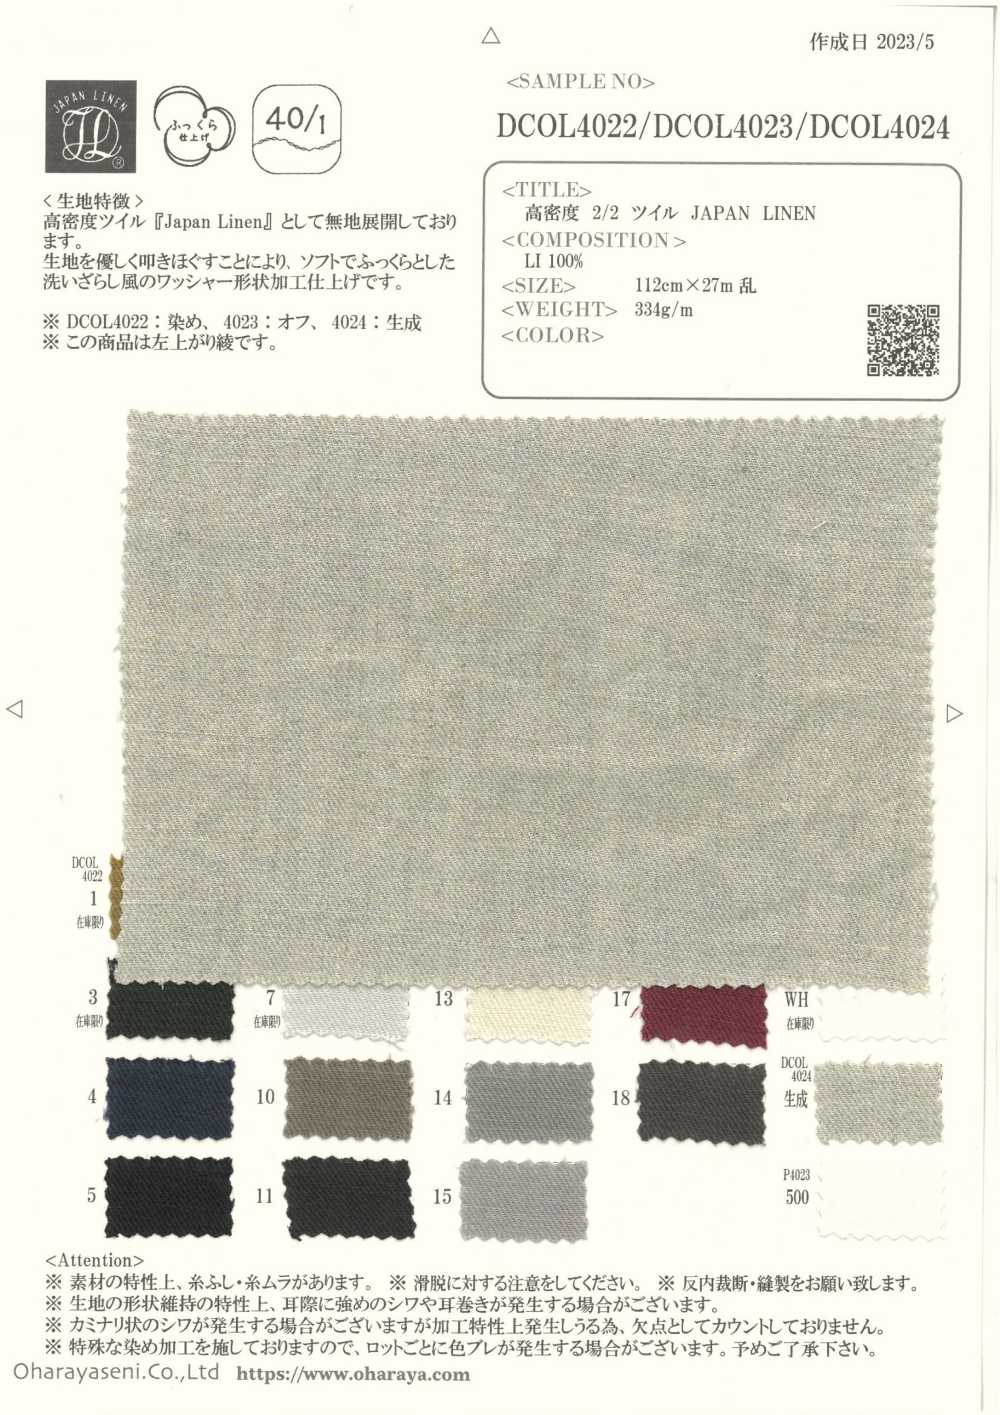 DCOL4024 High Density 2/2 Twill JAPAN LINEN[Textile / Fabric] Oharayaseni